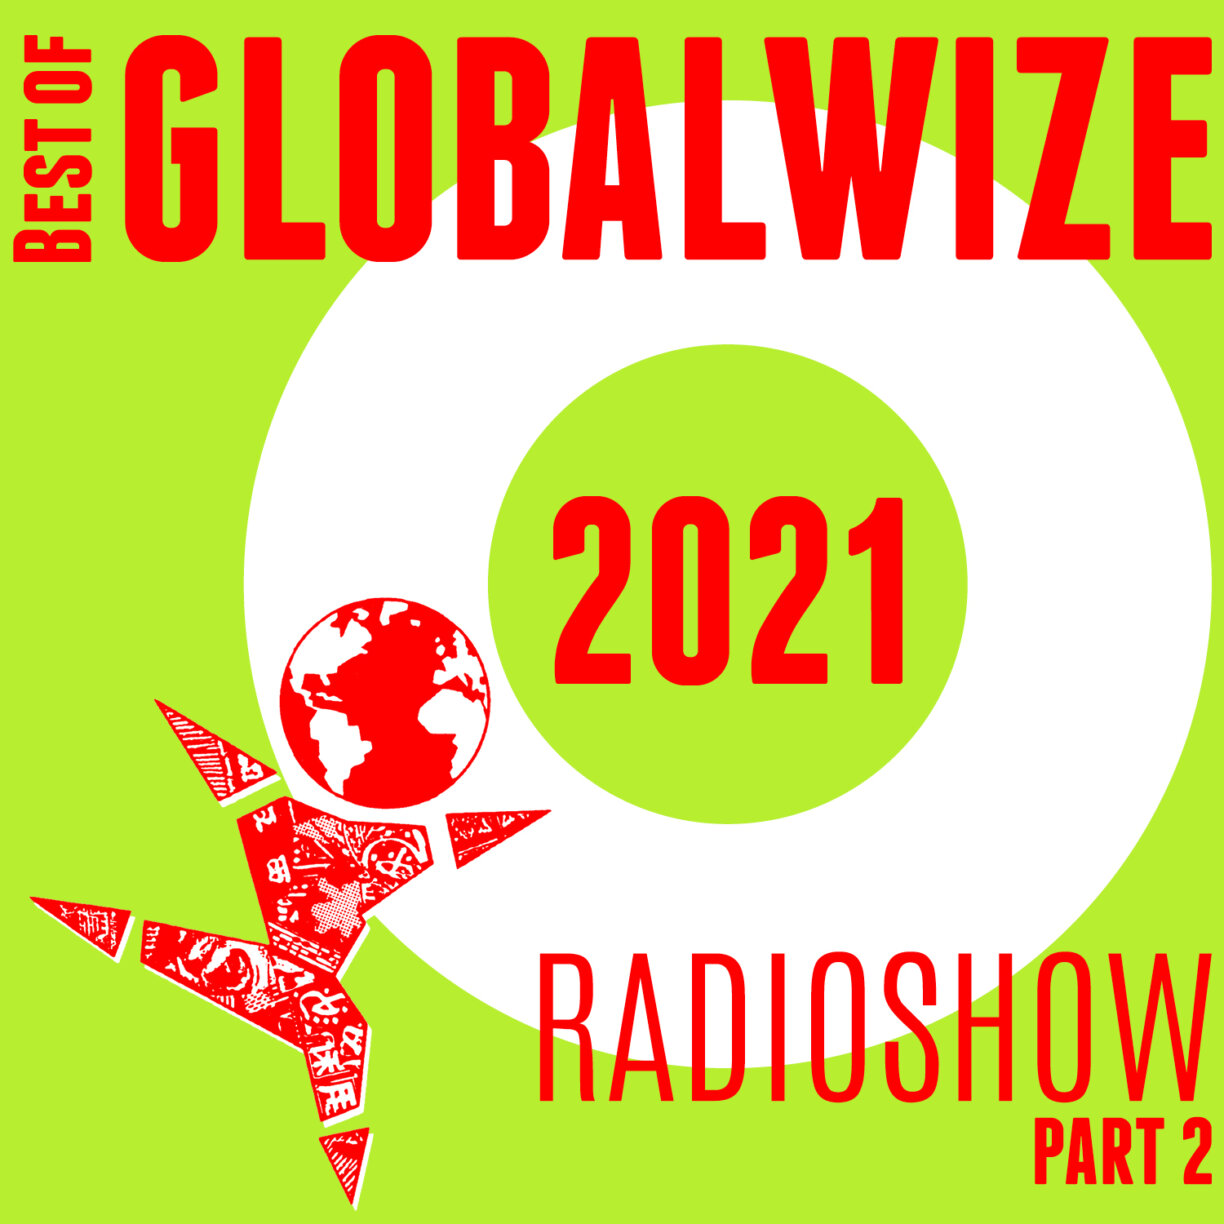 GreedyforBestMusic-Greedio-Globalwize-Radioshow-399-Best-Of-Globalwize-2021-Part 2-Radio-X-Weltbeat-Jean-Trouillet